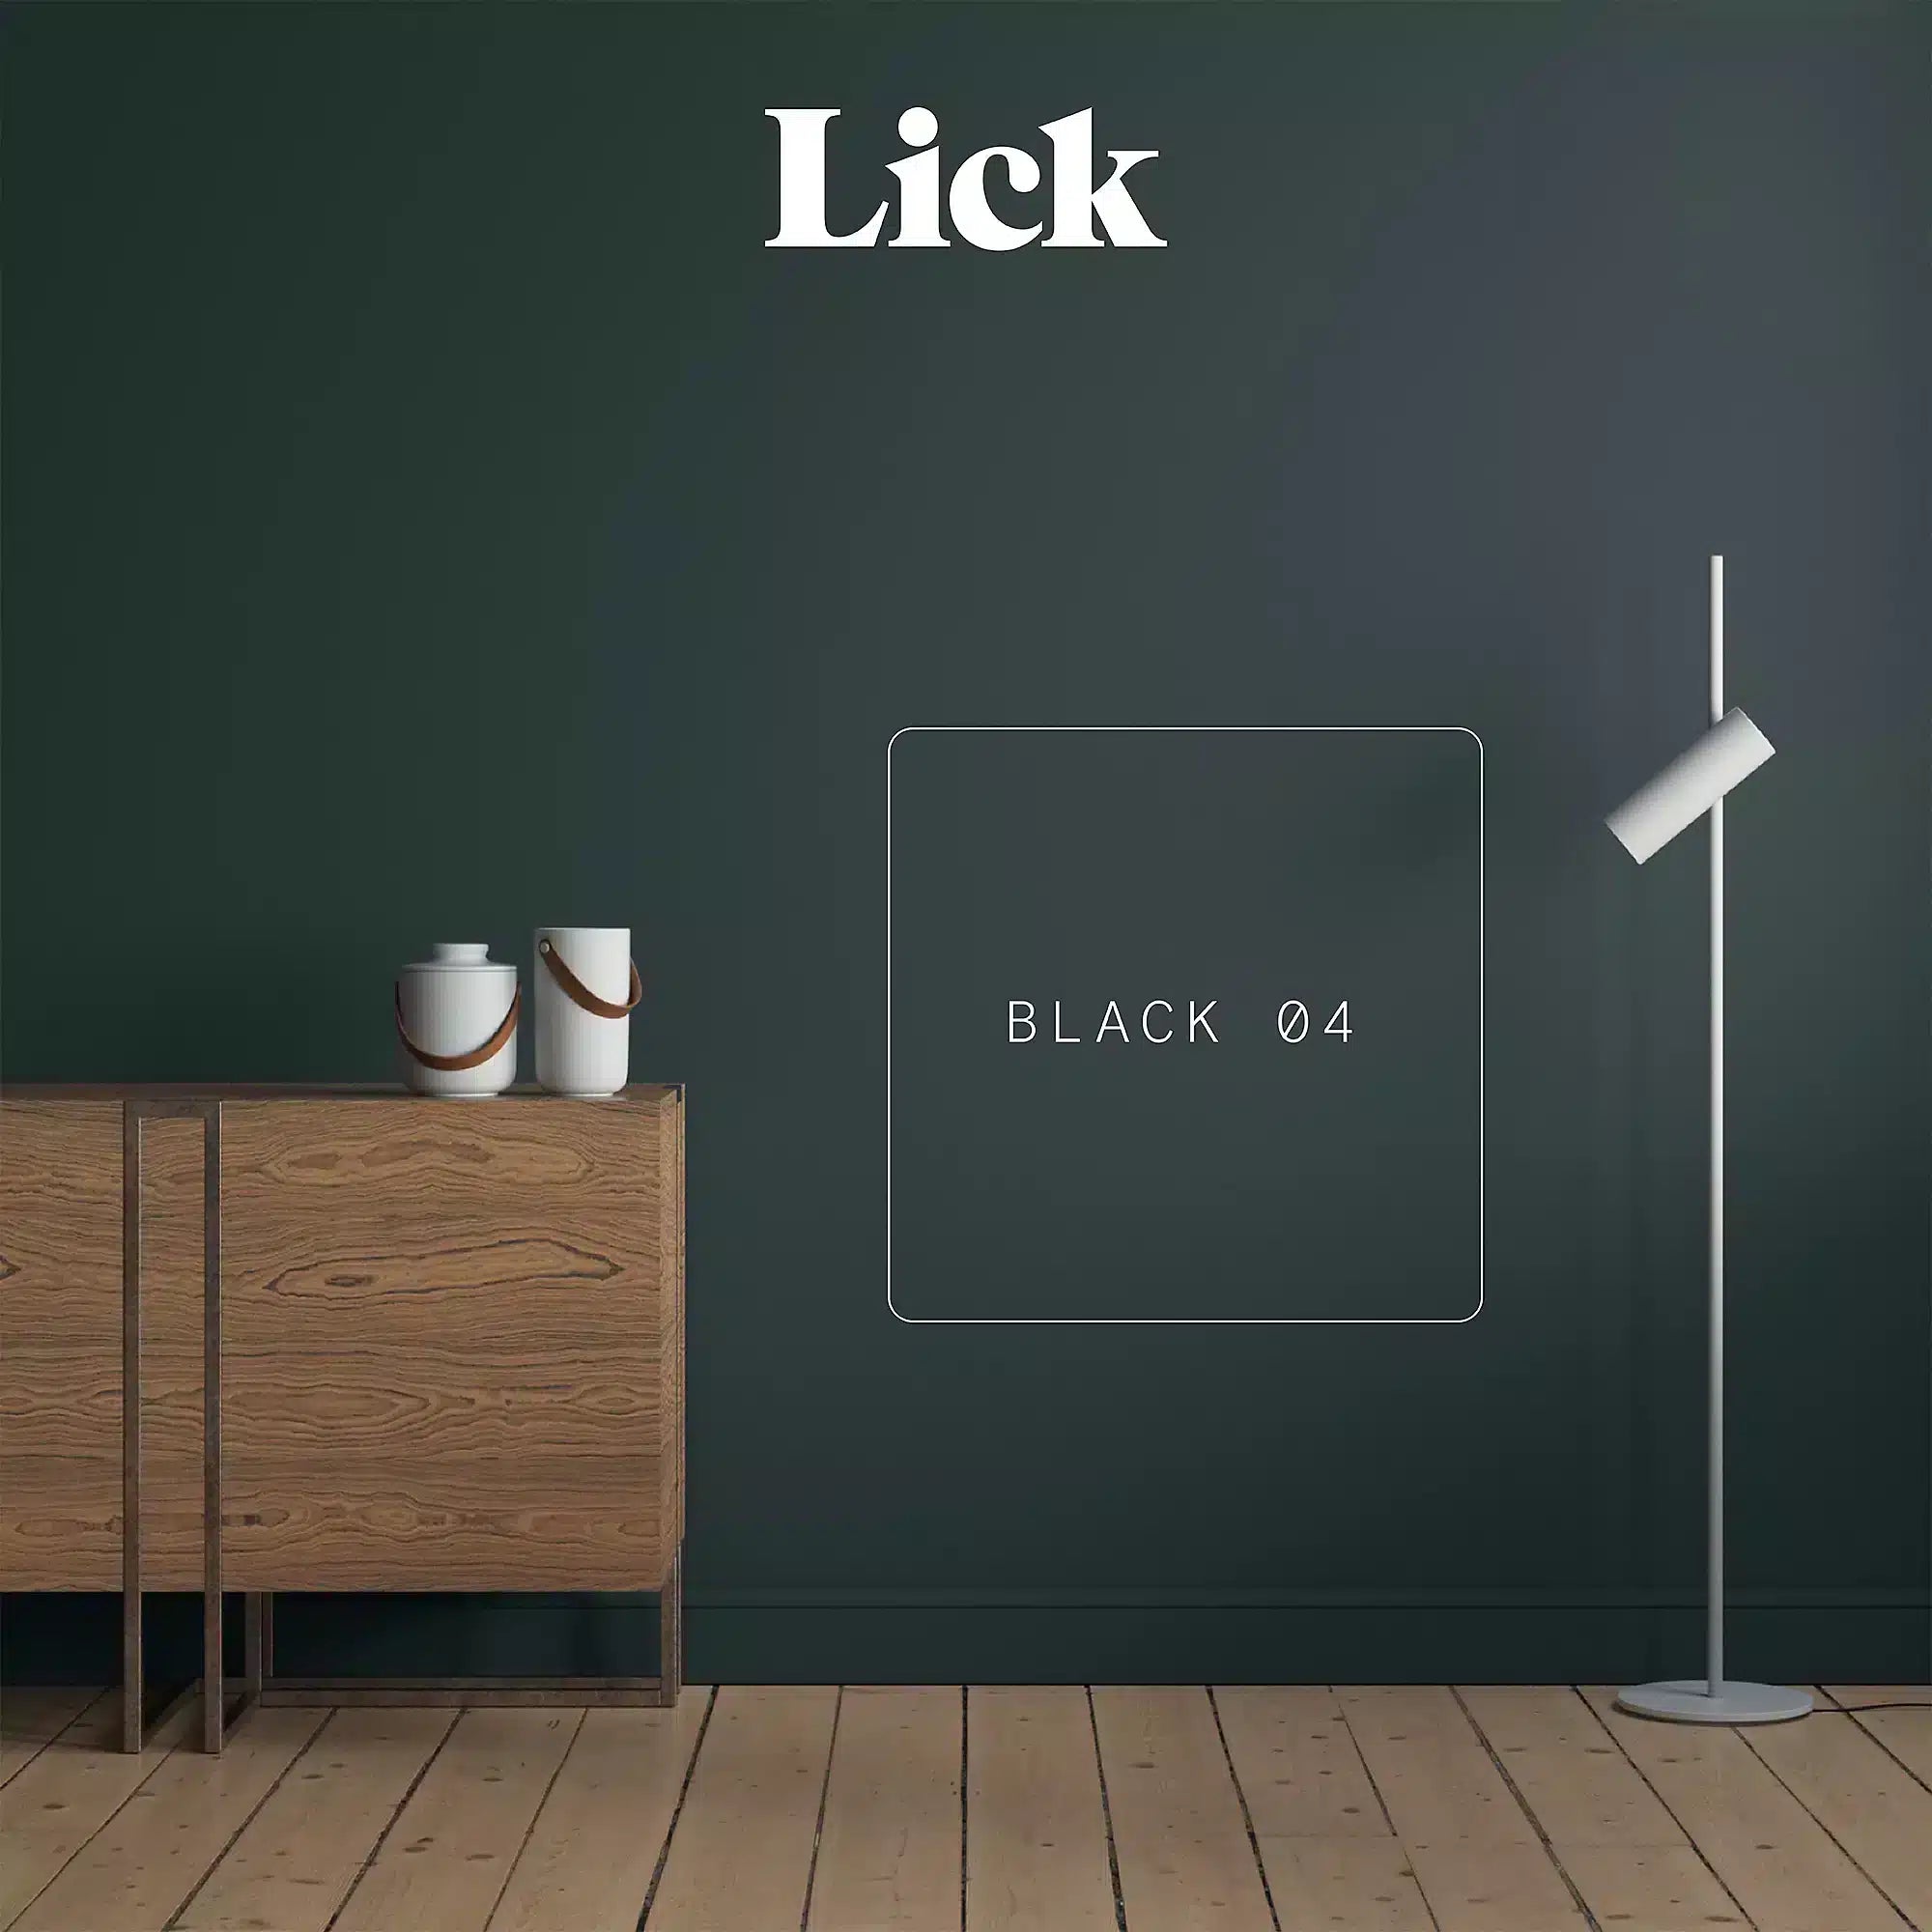 Lick Black 04 Eggshell Emulsion paint, 2.5L-5301